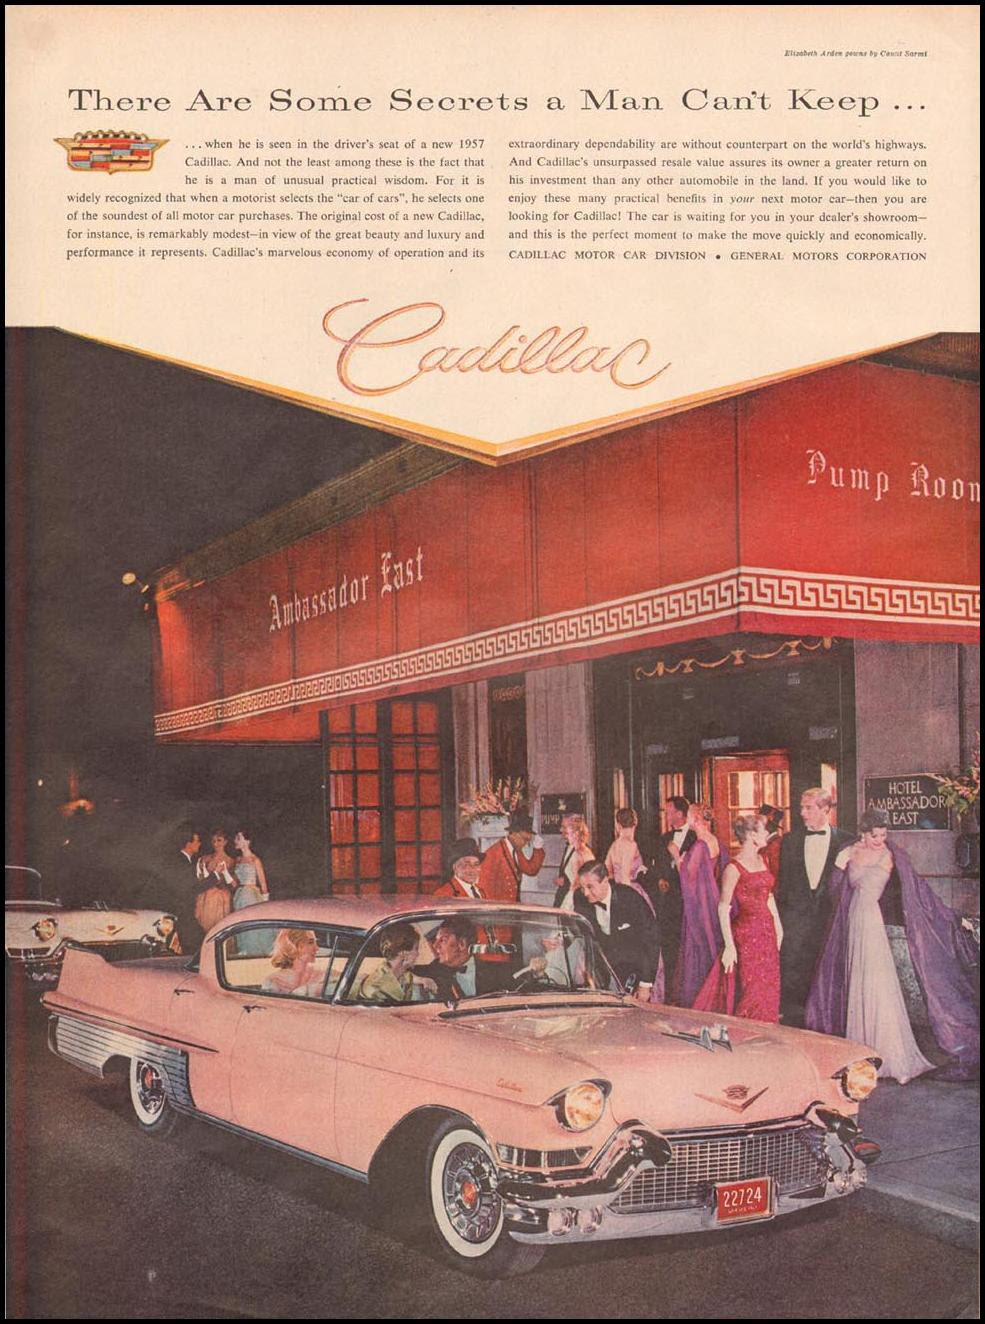 CADILLAC AUTOMOBILES
LIFE
09/09/1957
p. 82